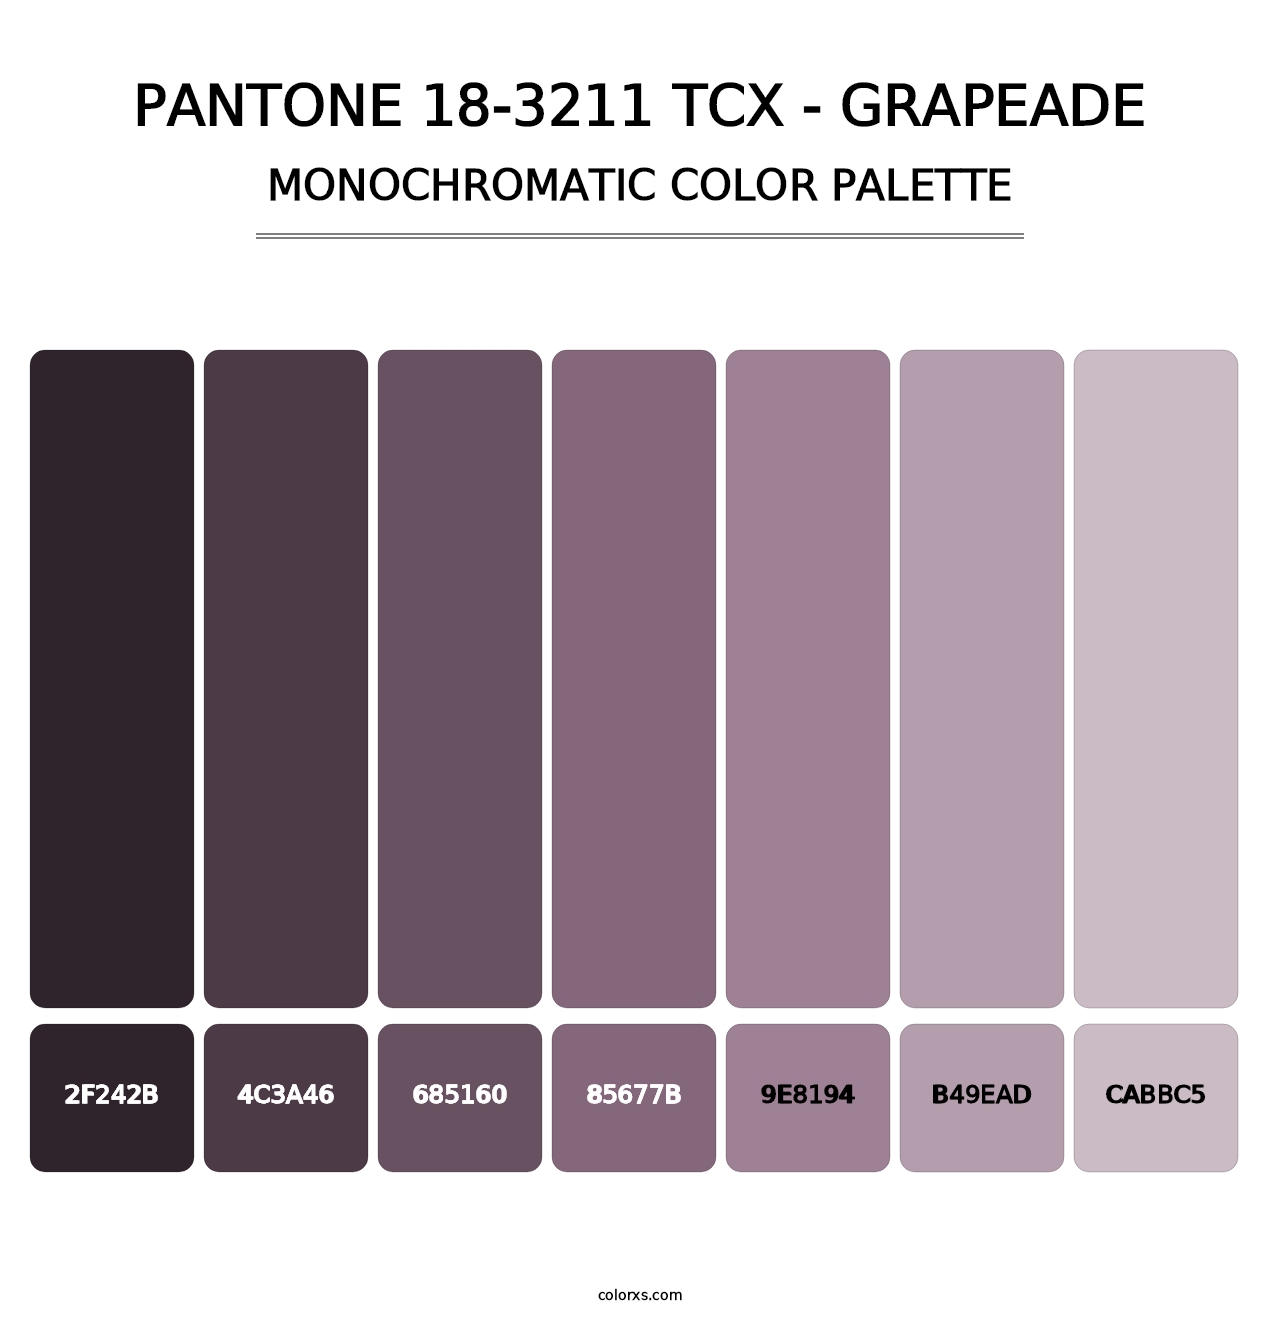 PANTONE 18-3211 TCX - Grapeade - Monochromatic Color Palette